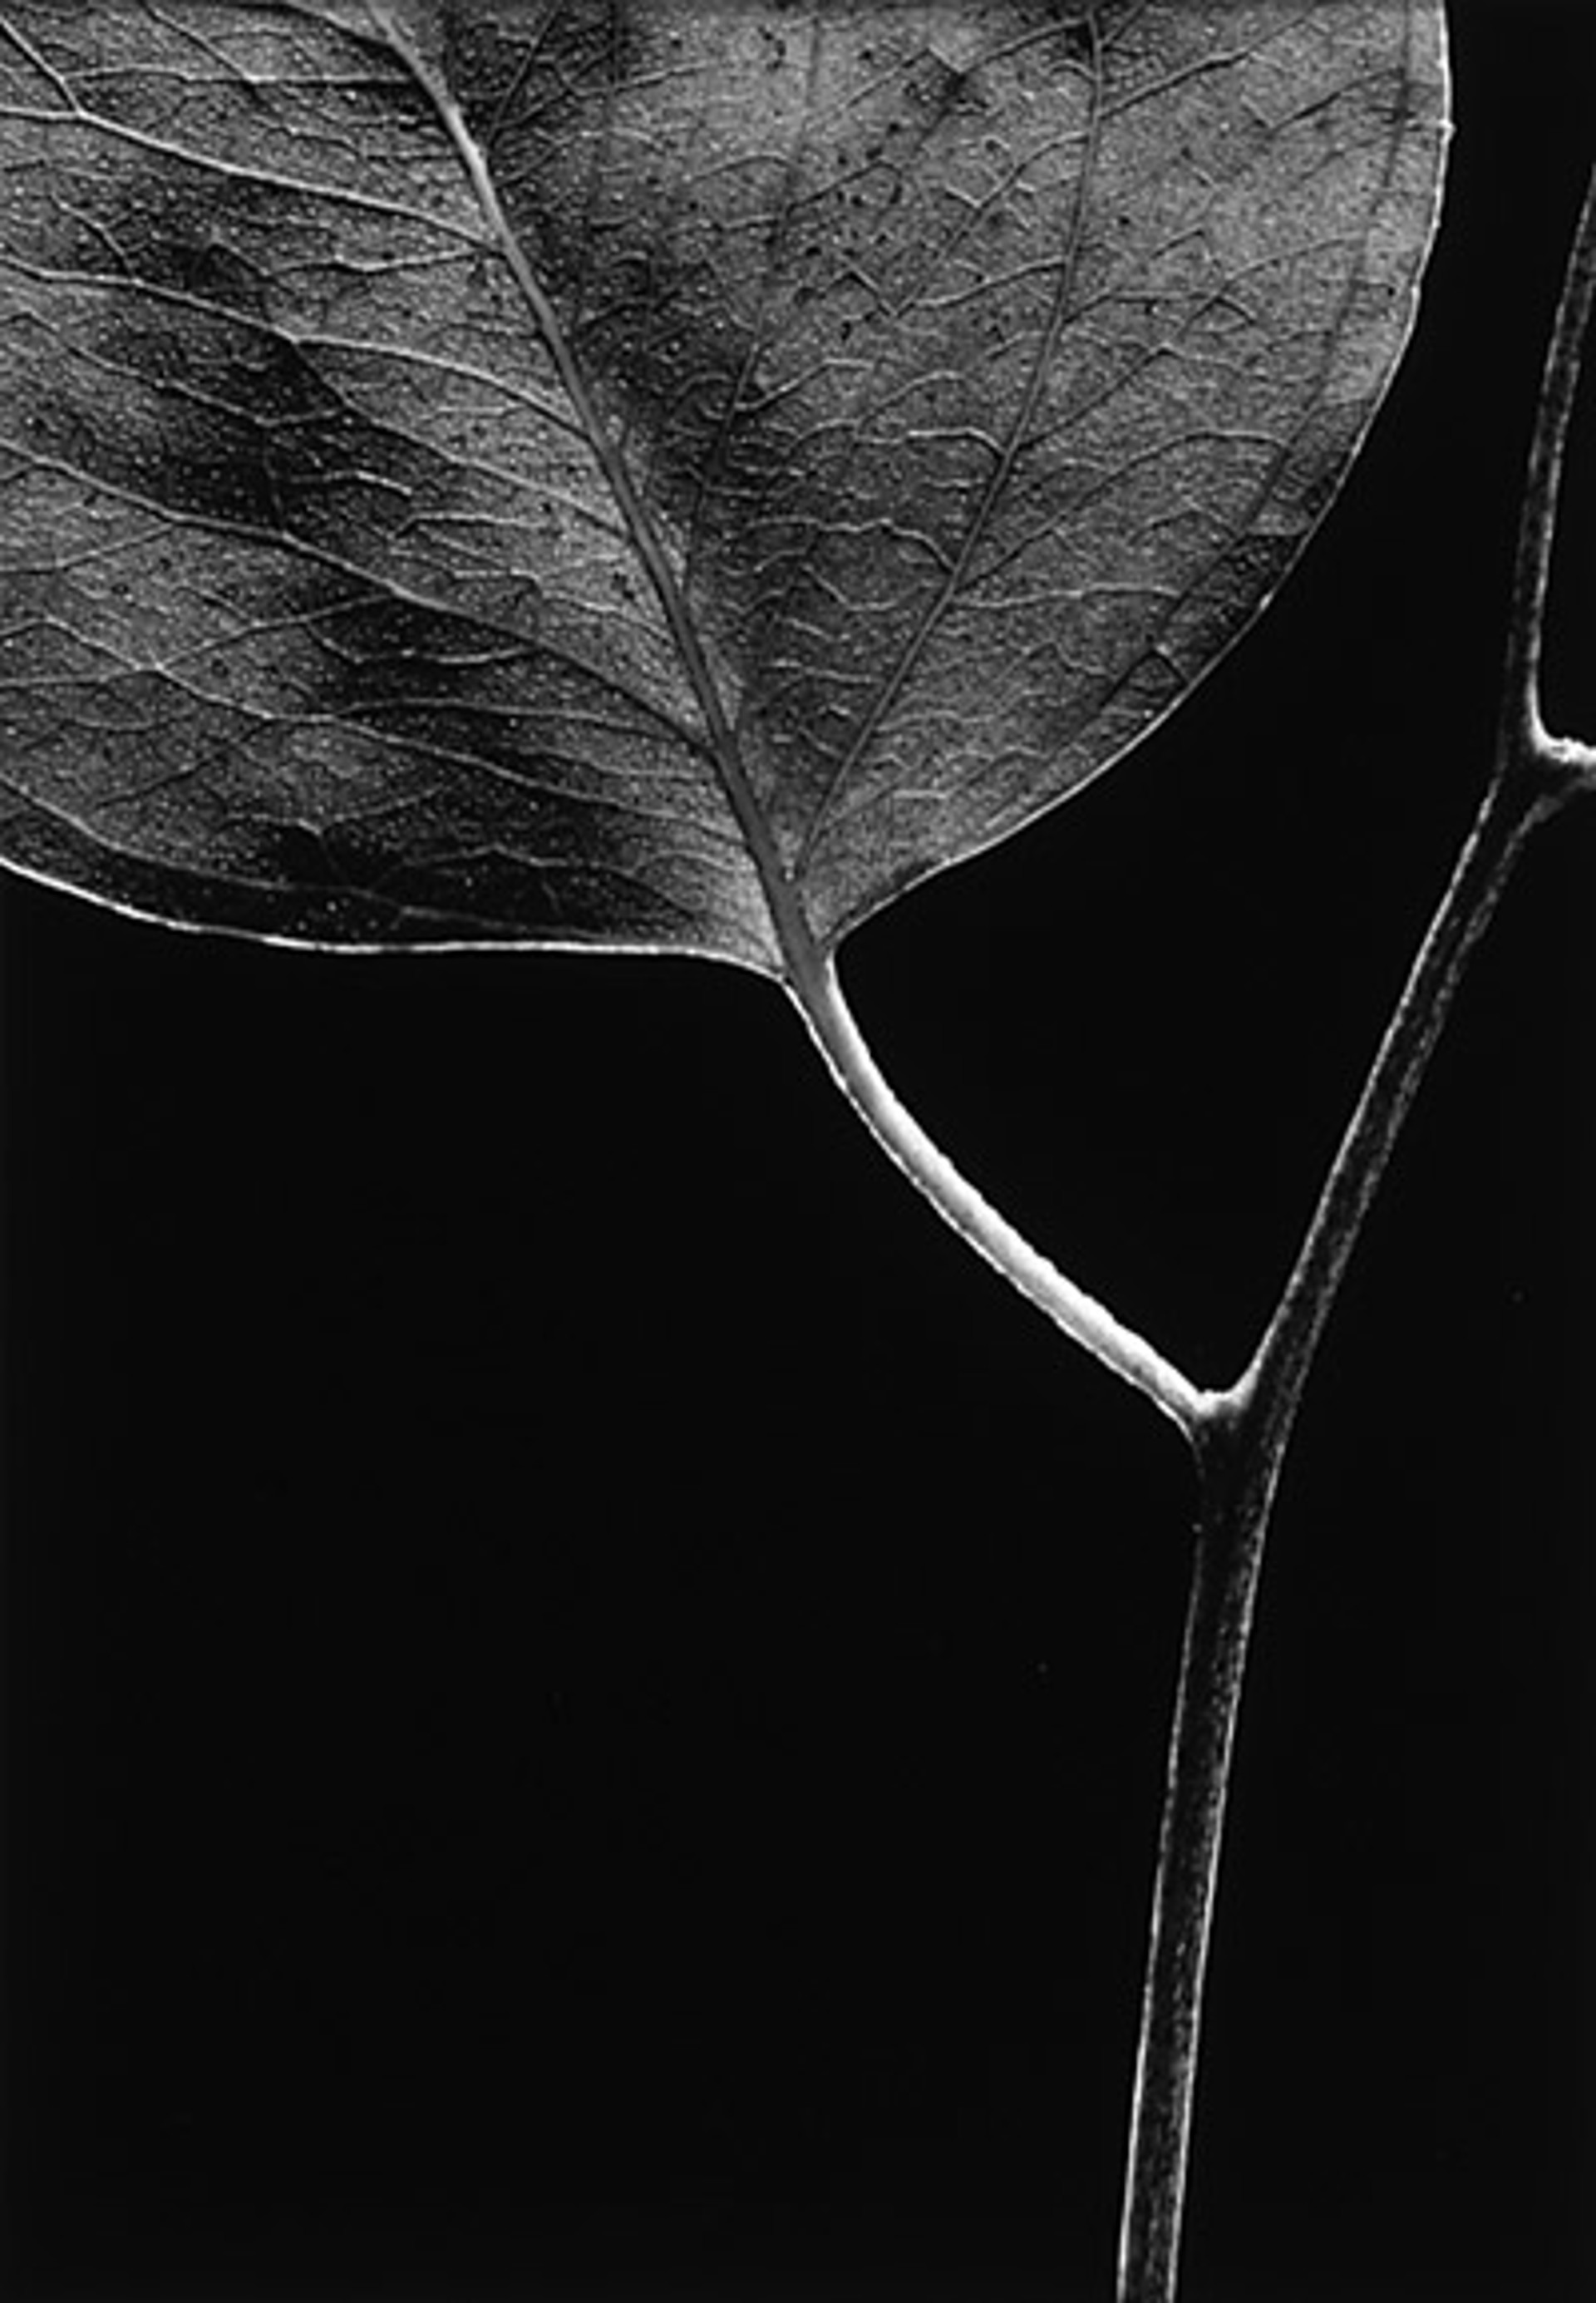 Eucalyptus Leaf by MaryAnn Bushweller